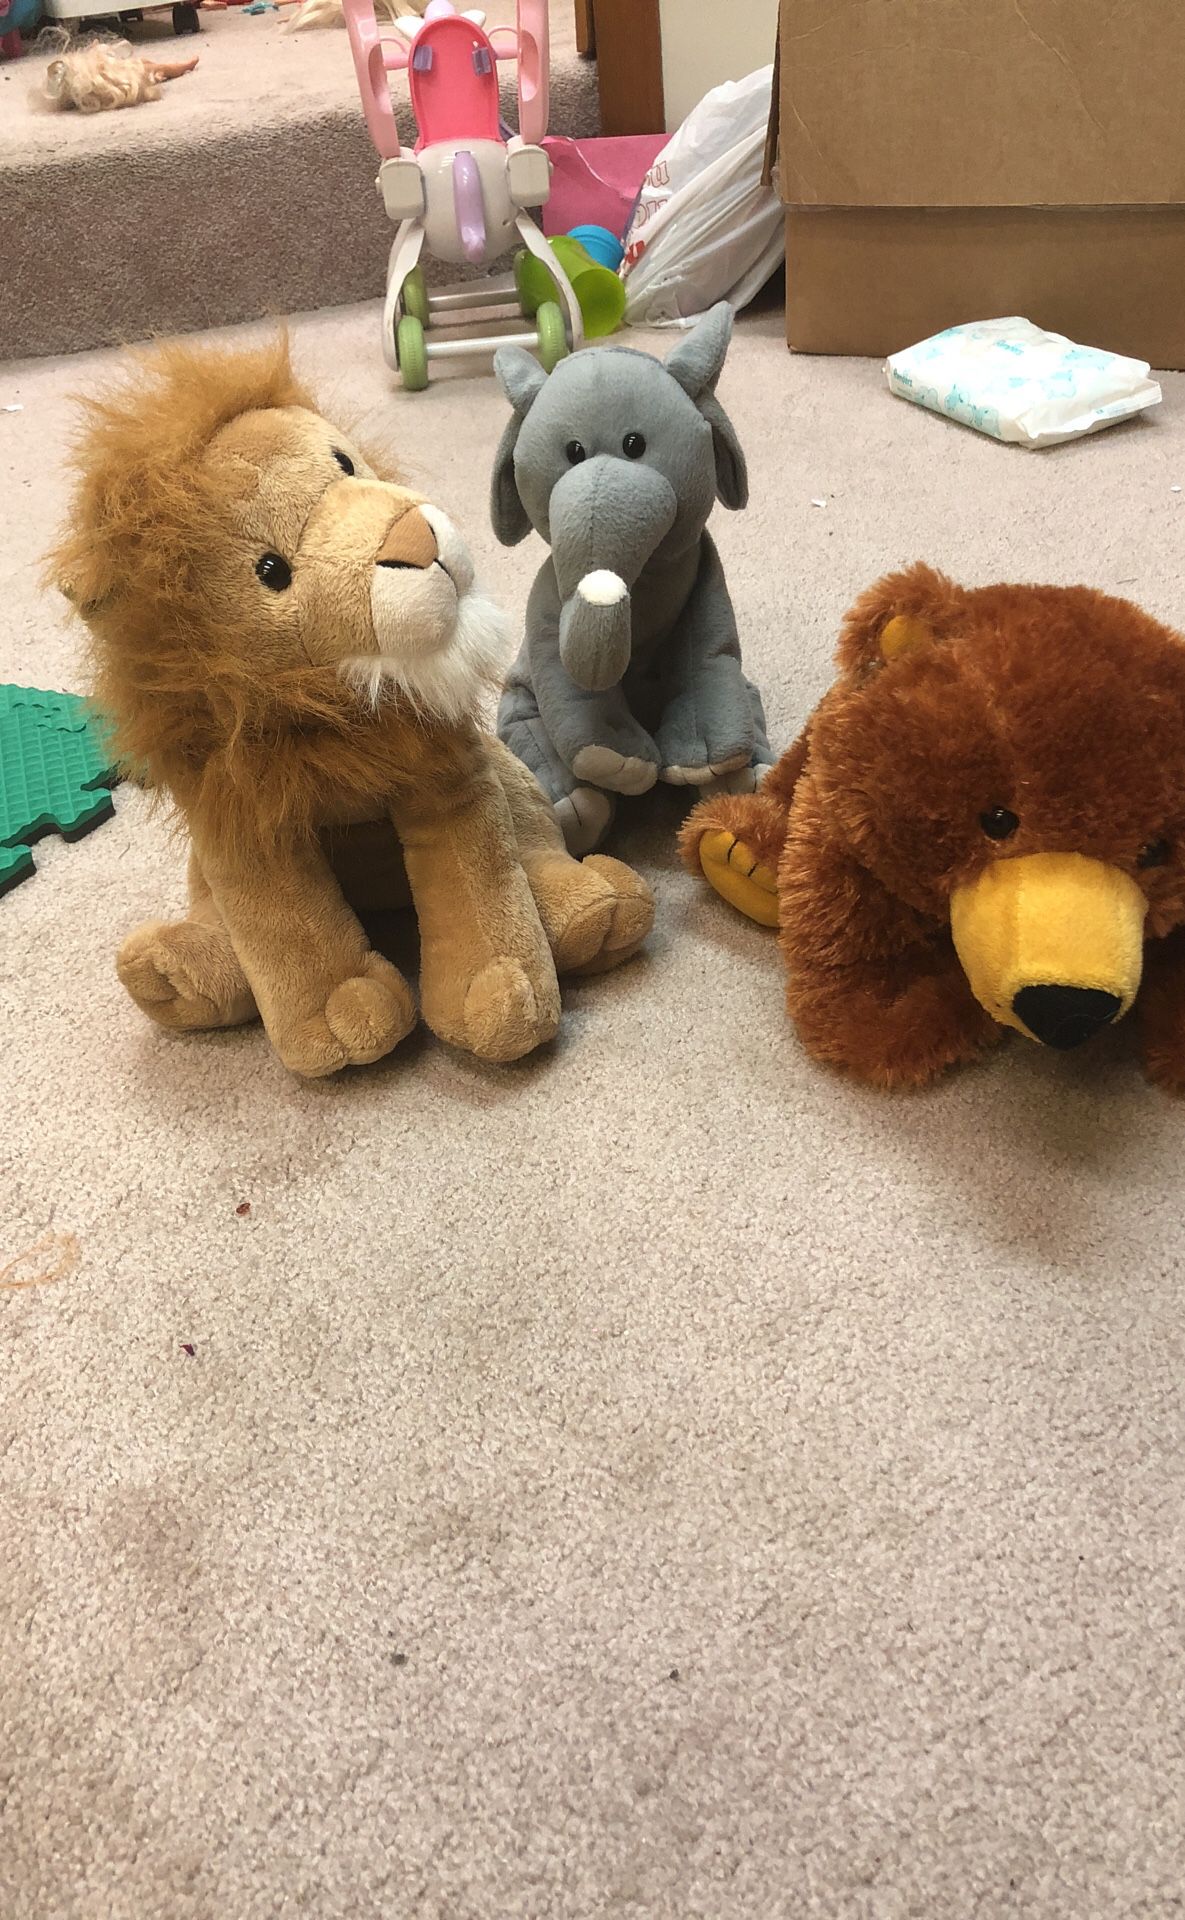 3 zoo stuffed animals